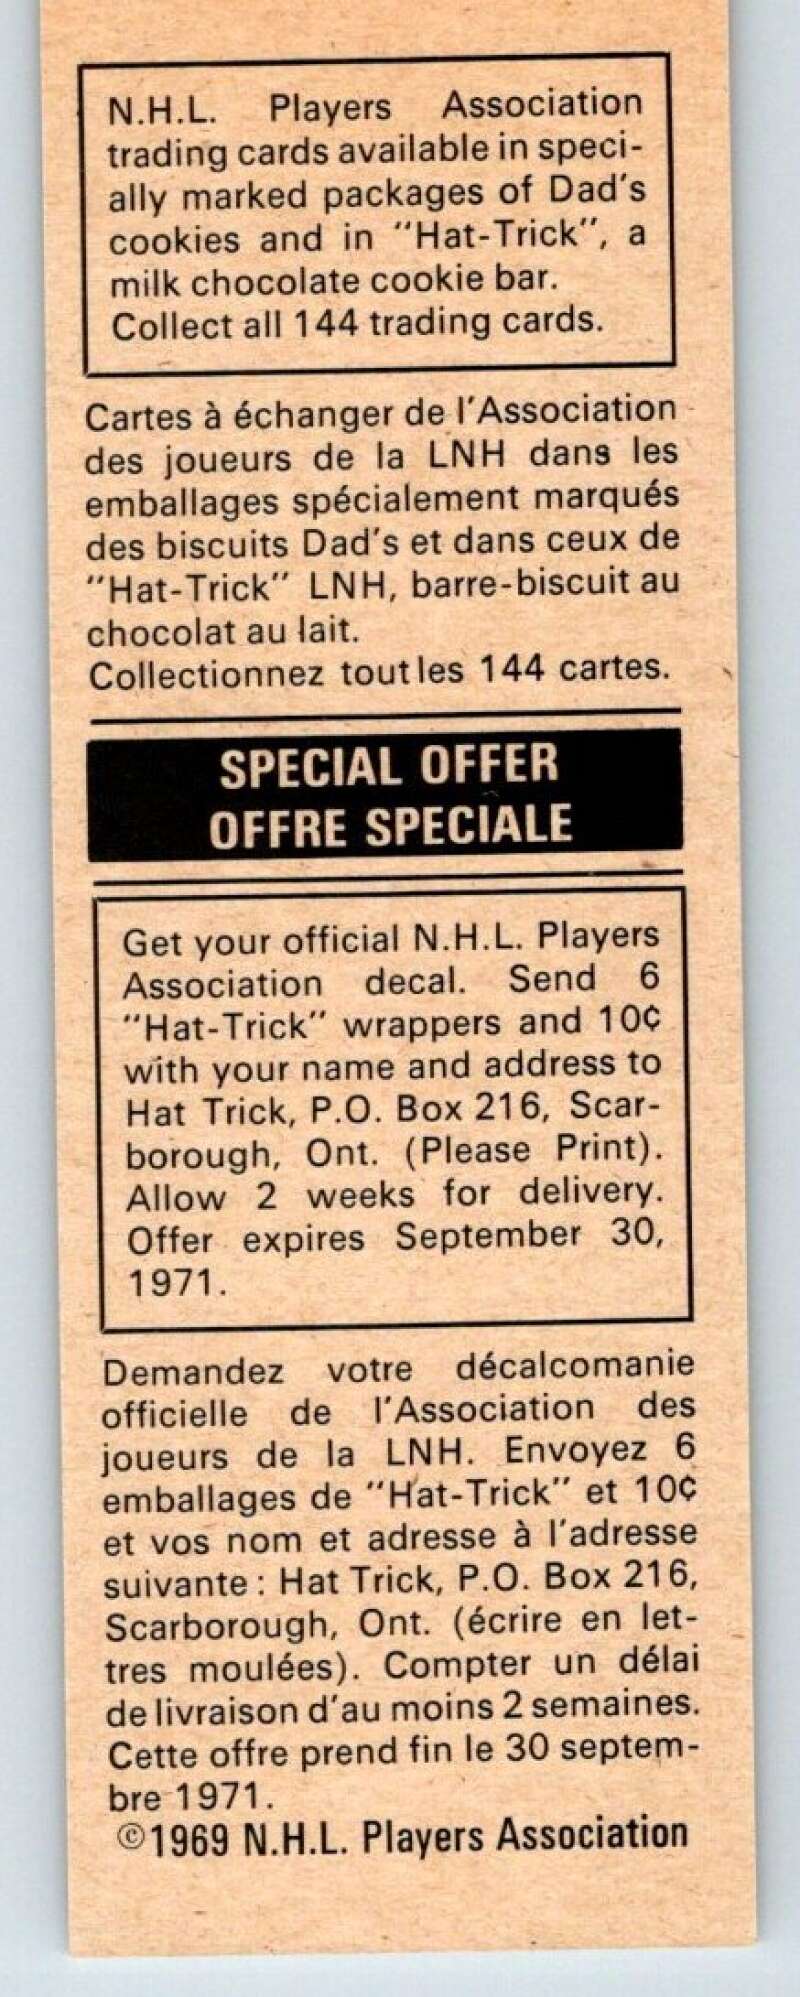 1970-71 Dad's Cookies #50 Paul Henderson  Toronto Maple Leafs  X275